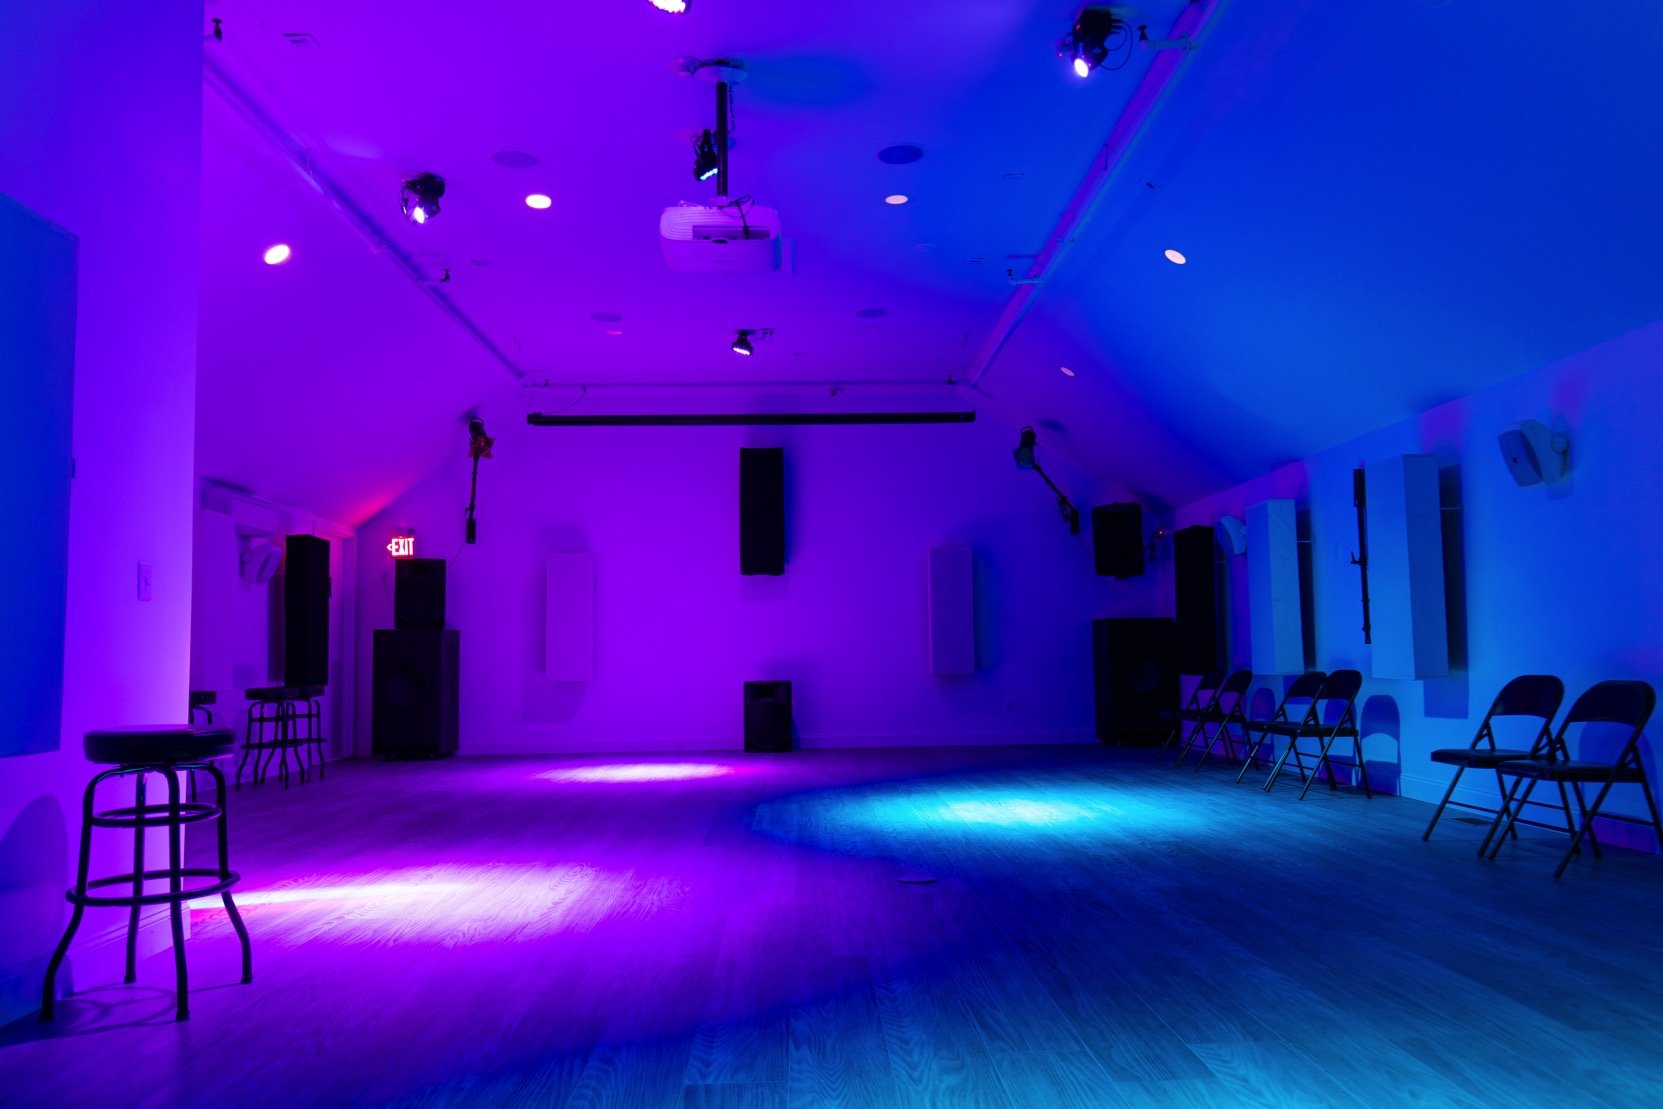 076A5633+Boston Studio+Rental+Stoughton+Function+Hall+Rent+Party+Venue+Purple+Blue+Uplighting.jpg